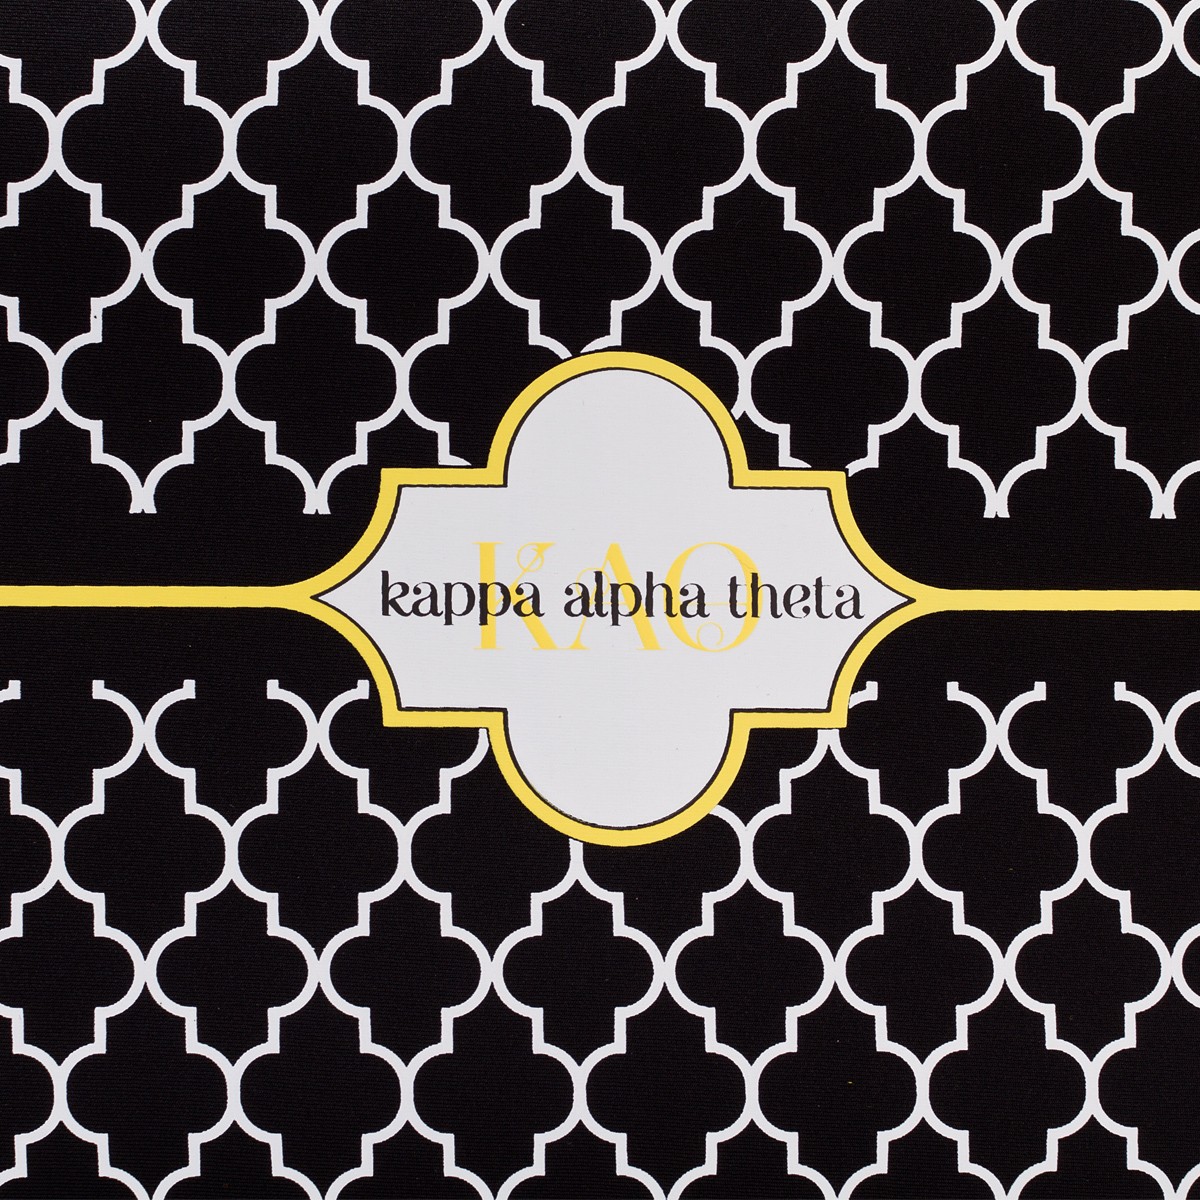 Kappa Alpha Theta Quotes.